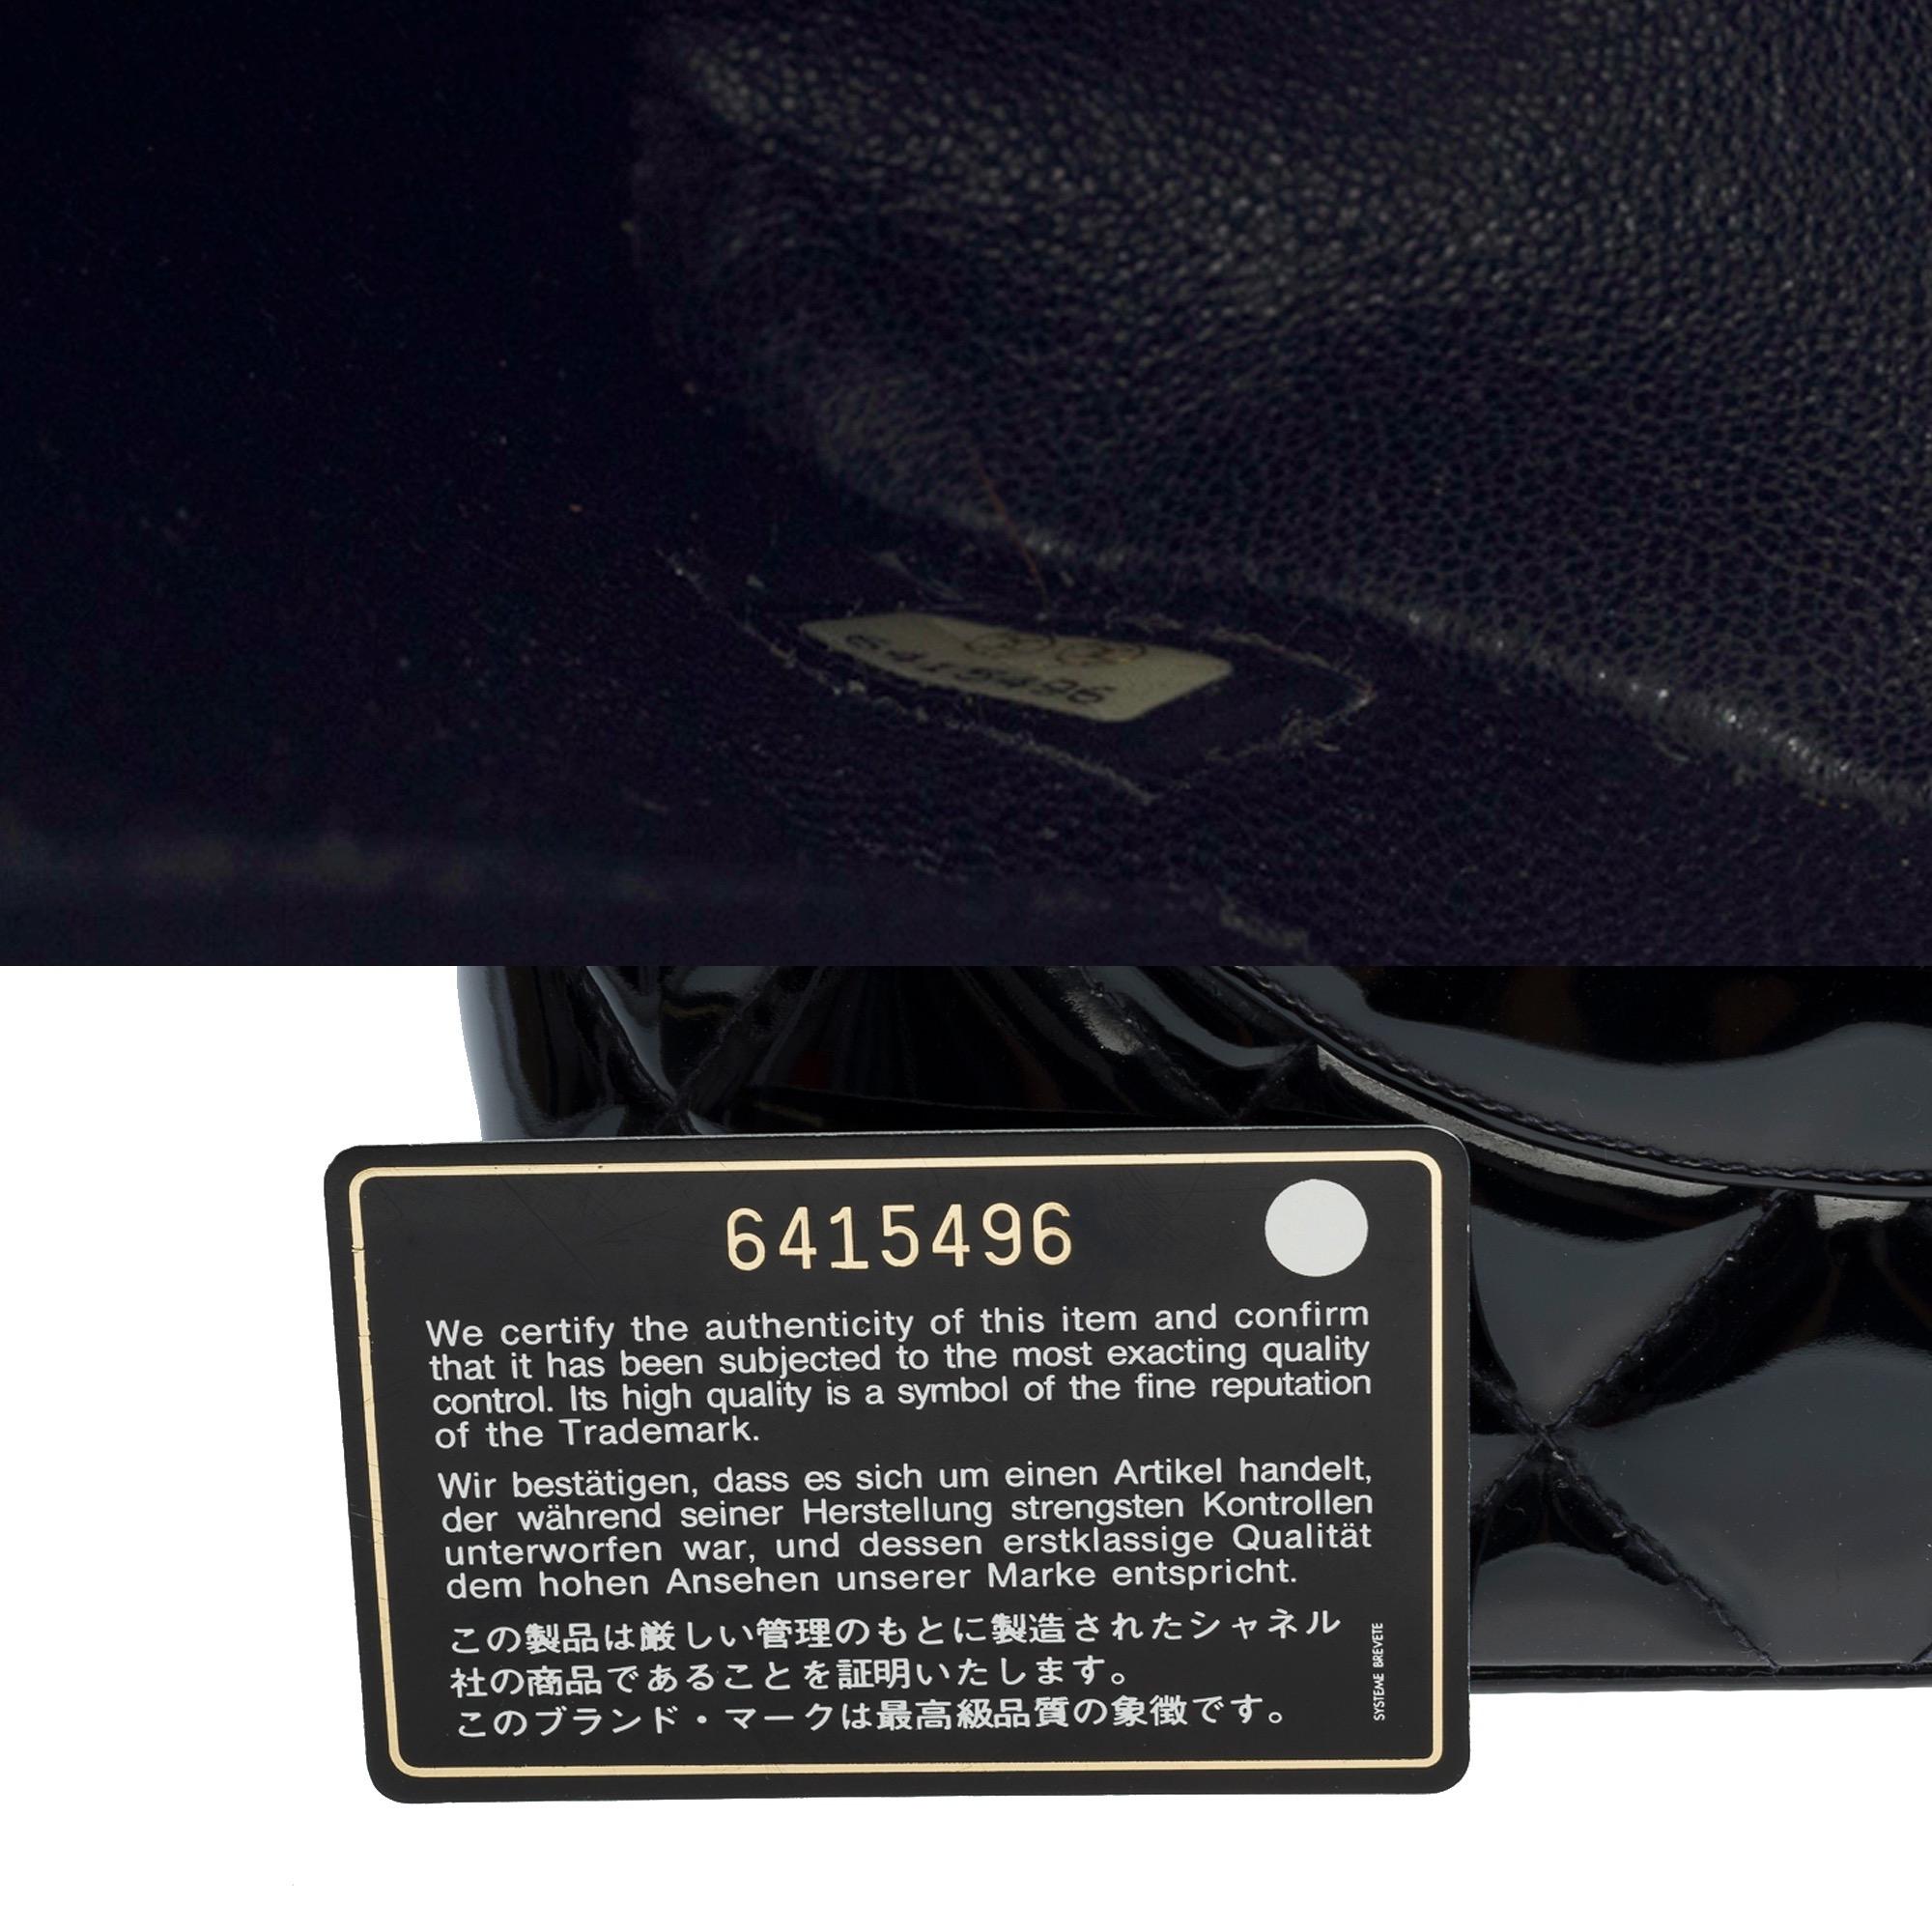 Magnifique sac Cabas Medallion de Chanel en cuir verni noir, SHW en vente 2